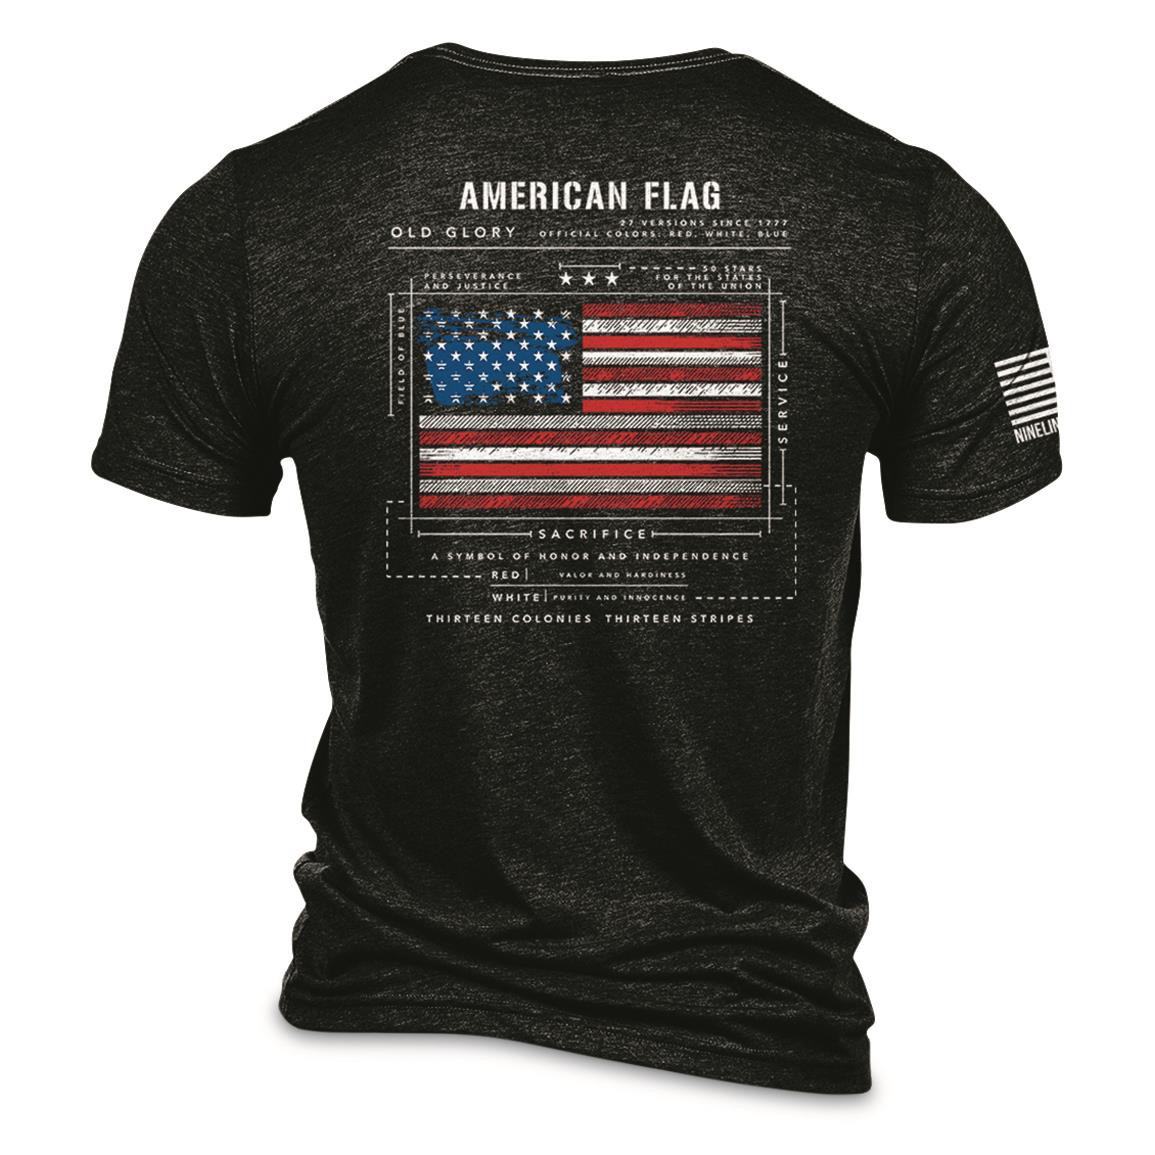 Nine Line Men's American Flag Schematic Short Sleeve Tee, Black/charcoal